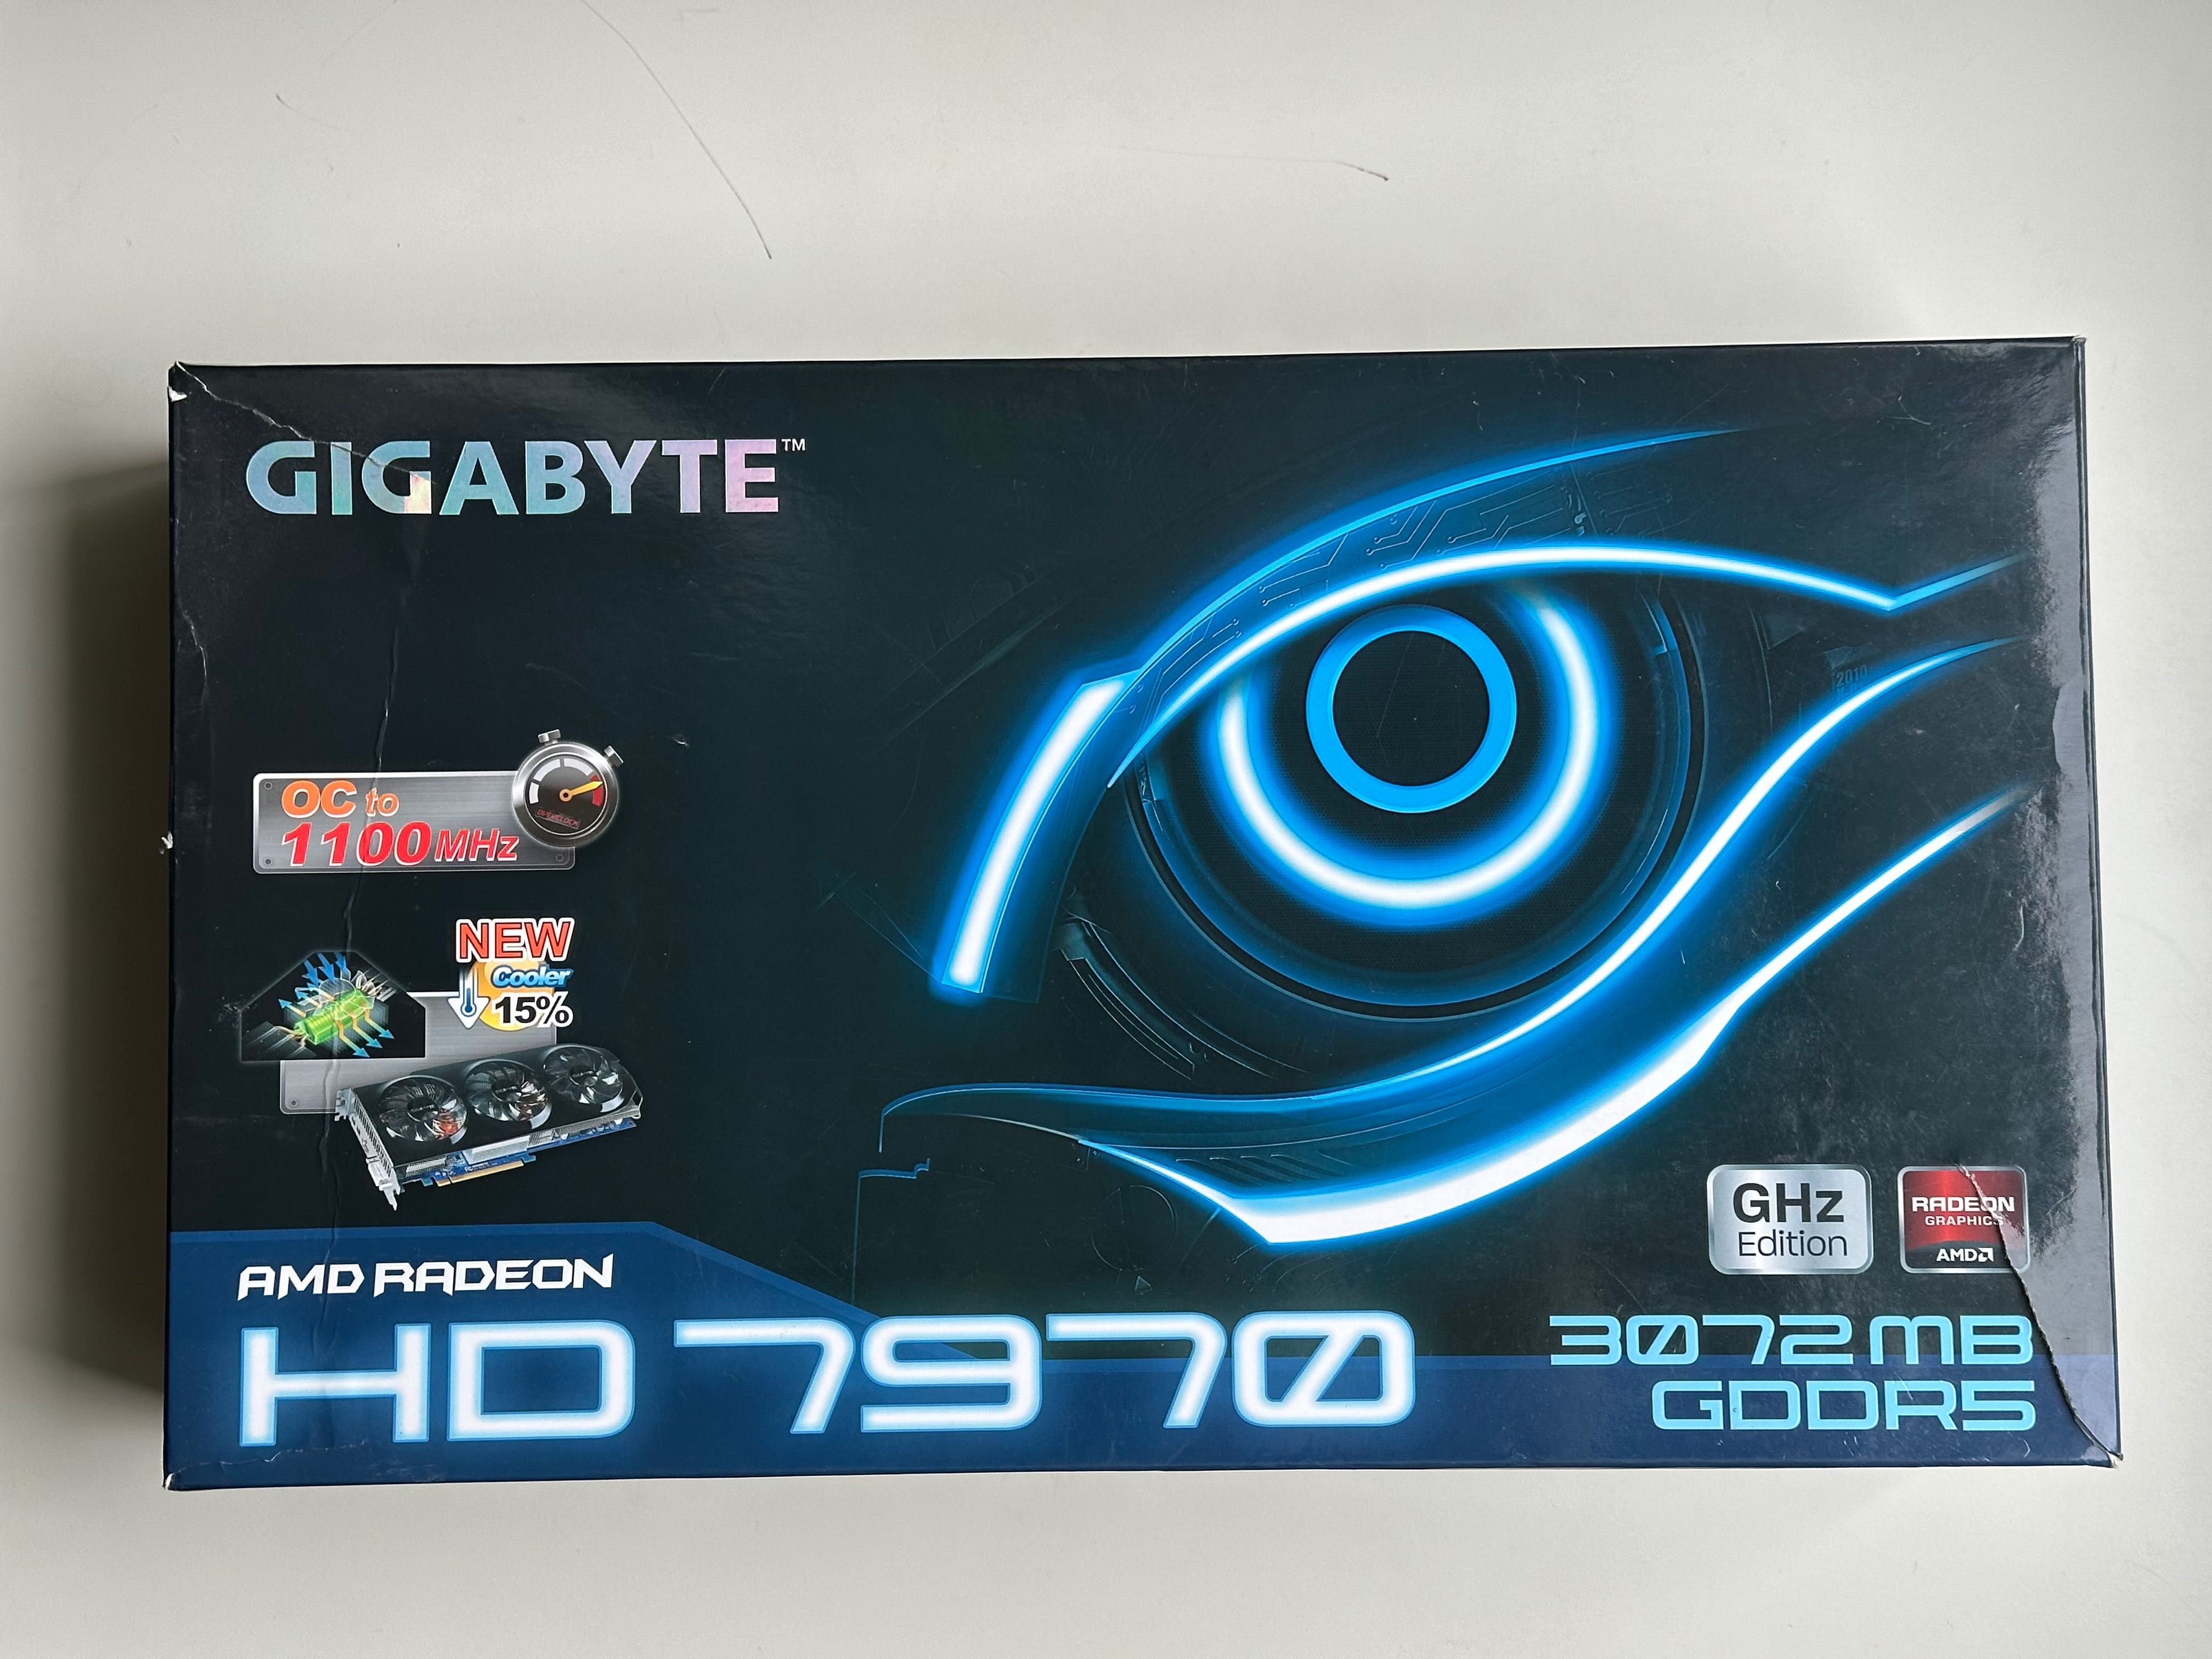 Amd Radeon HD7970 1.1GHz Edition Gigabyte